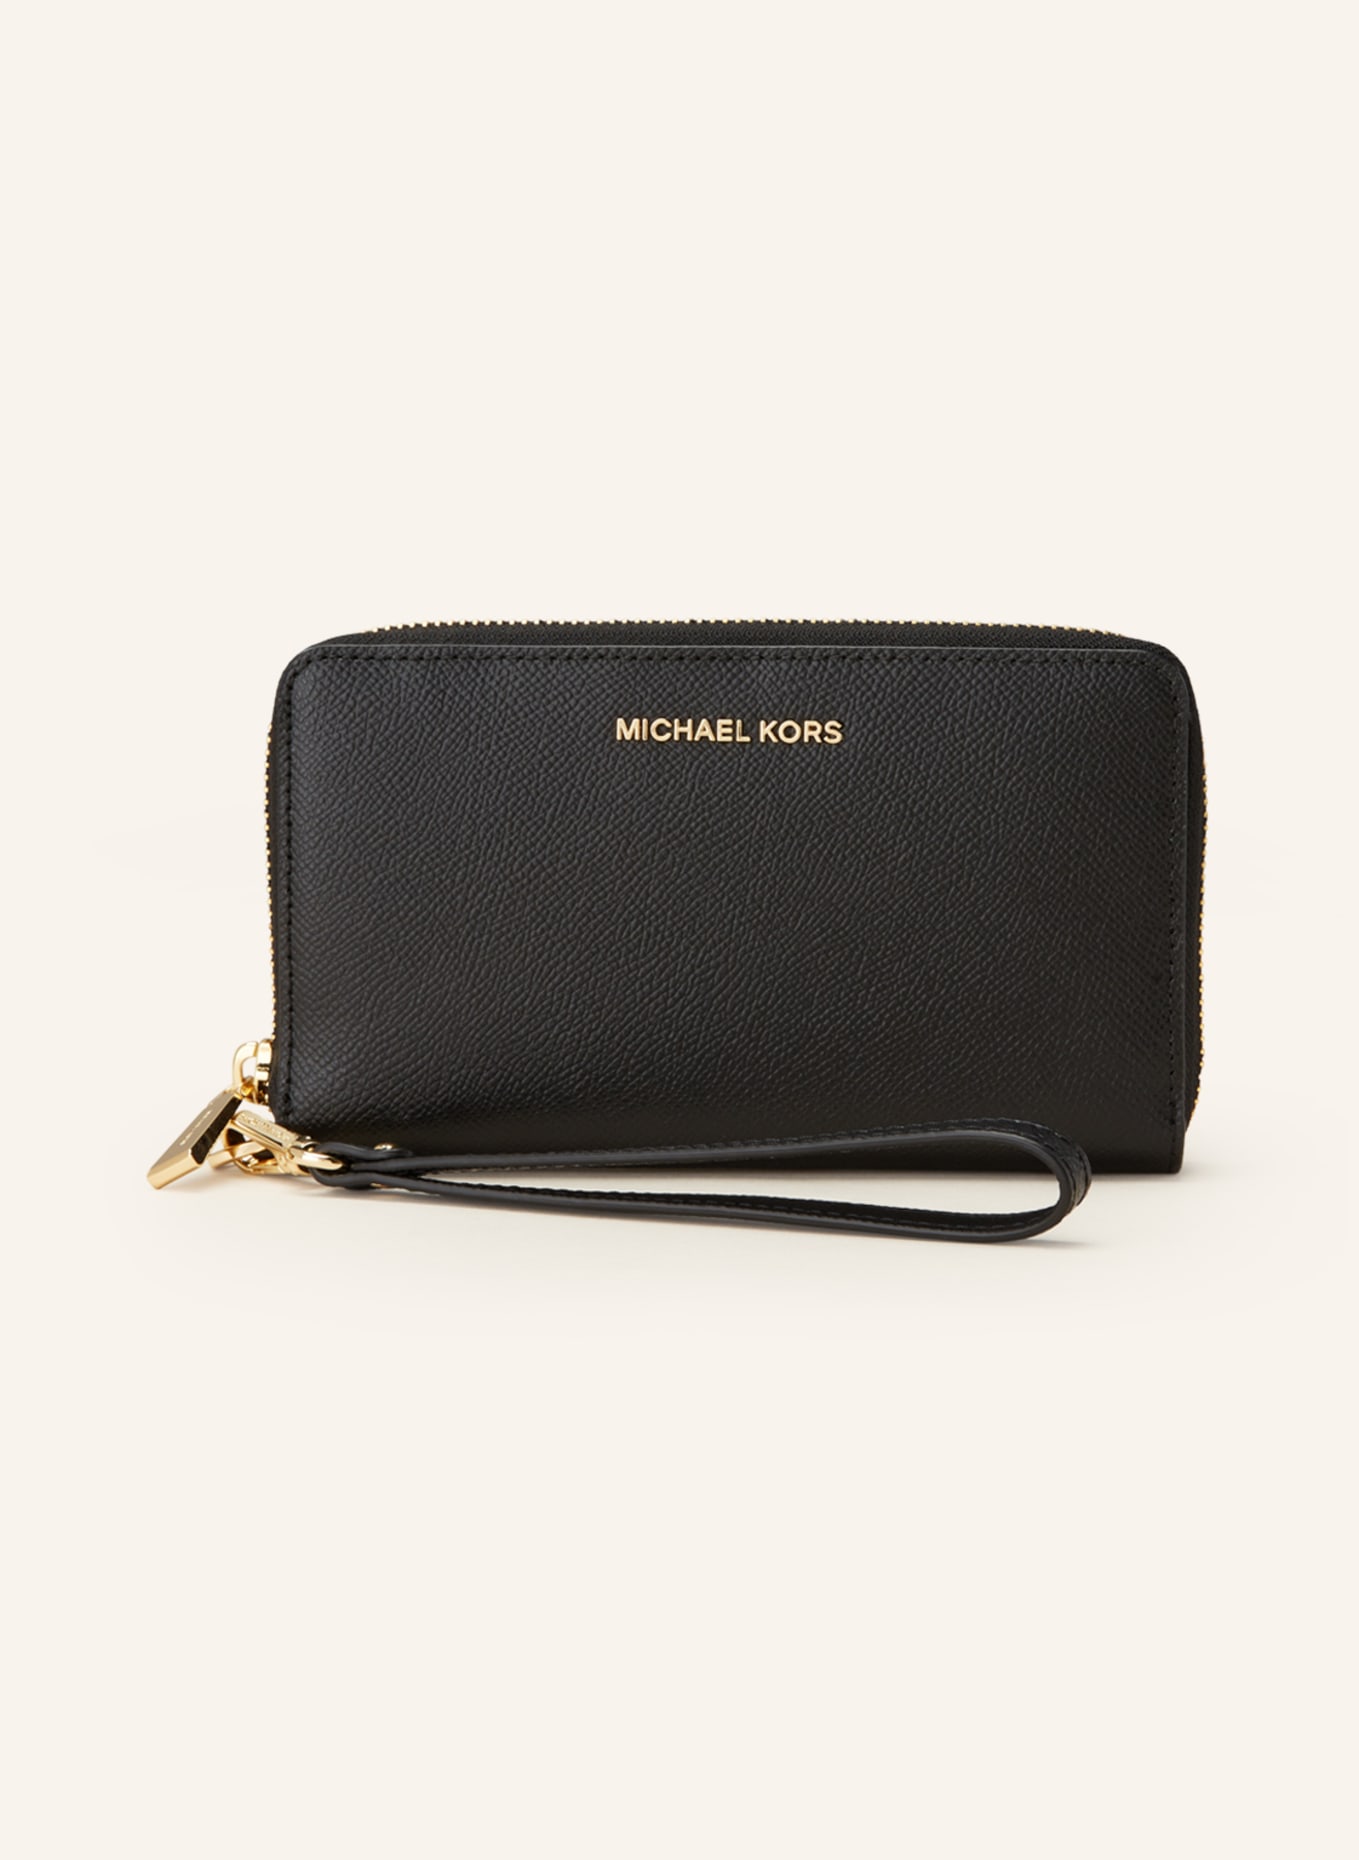 MICHAEL KORS Wallet JET SET with smartphone compartment, Color: BLACK (Image 1)